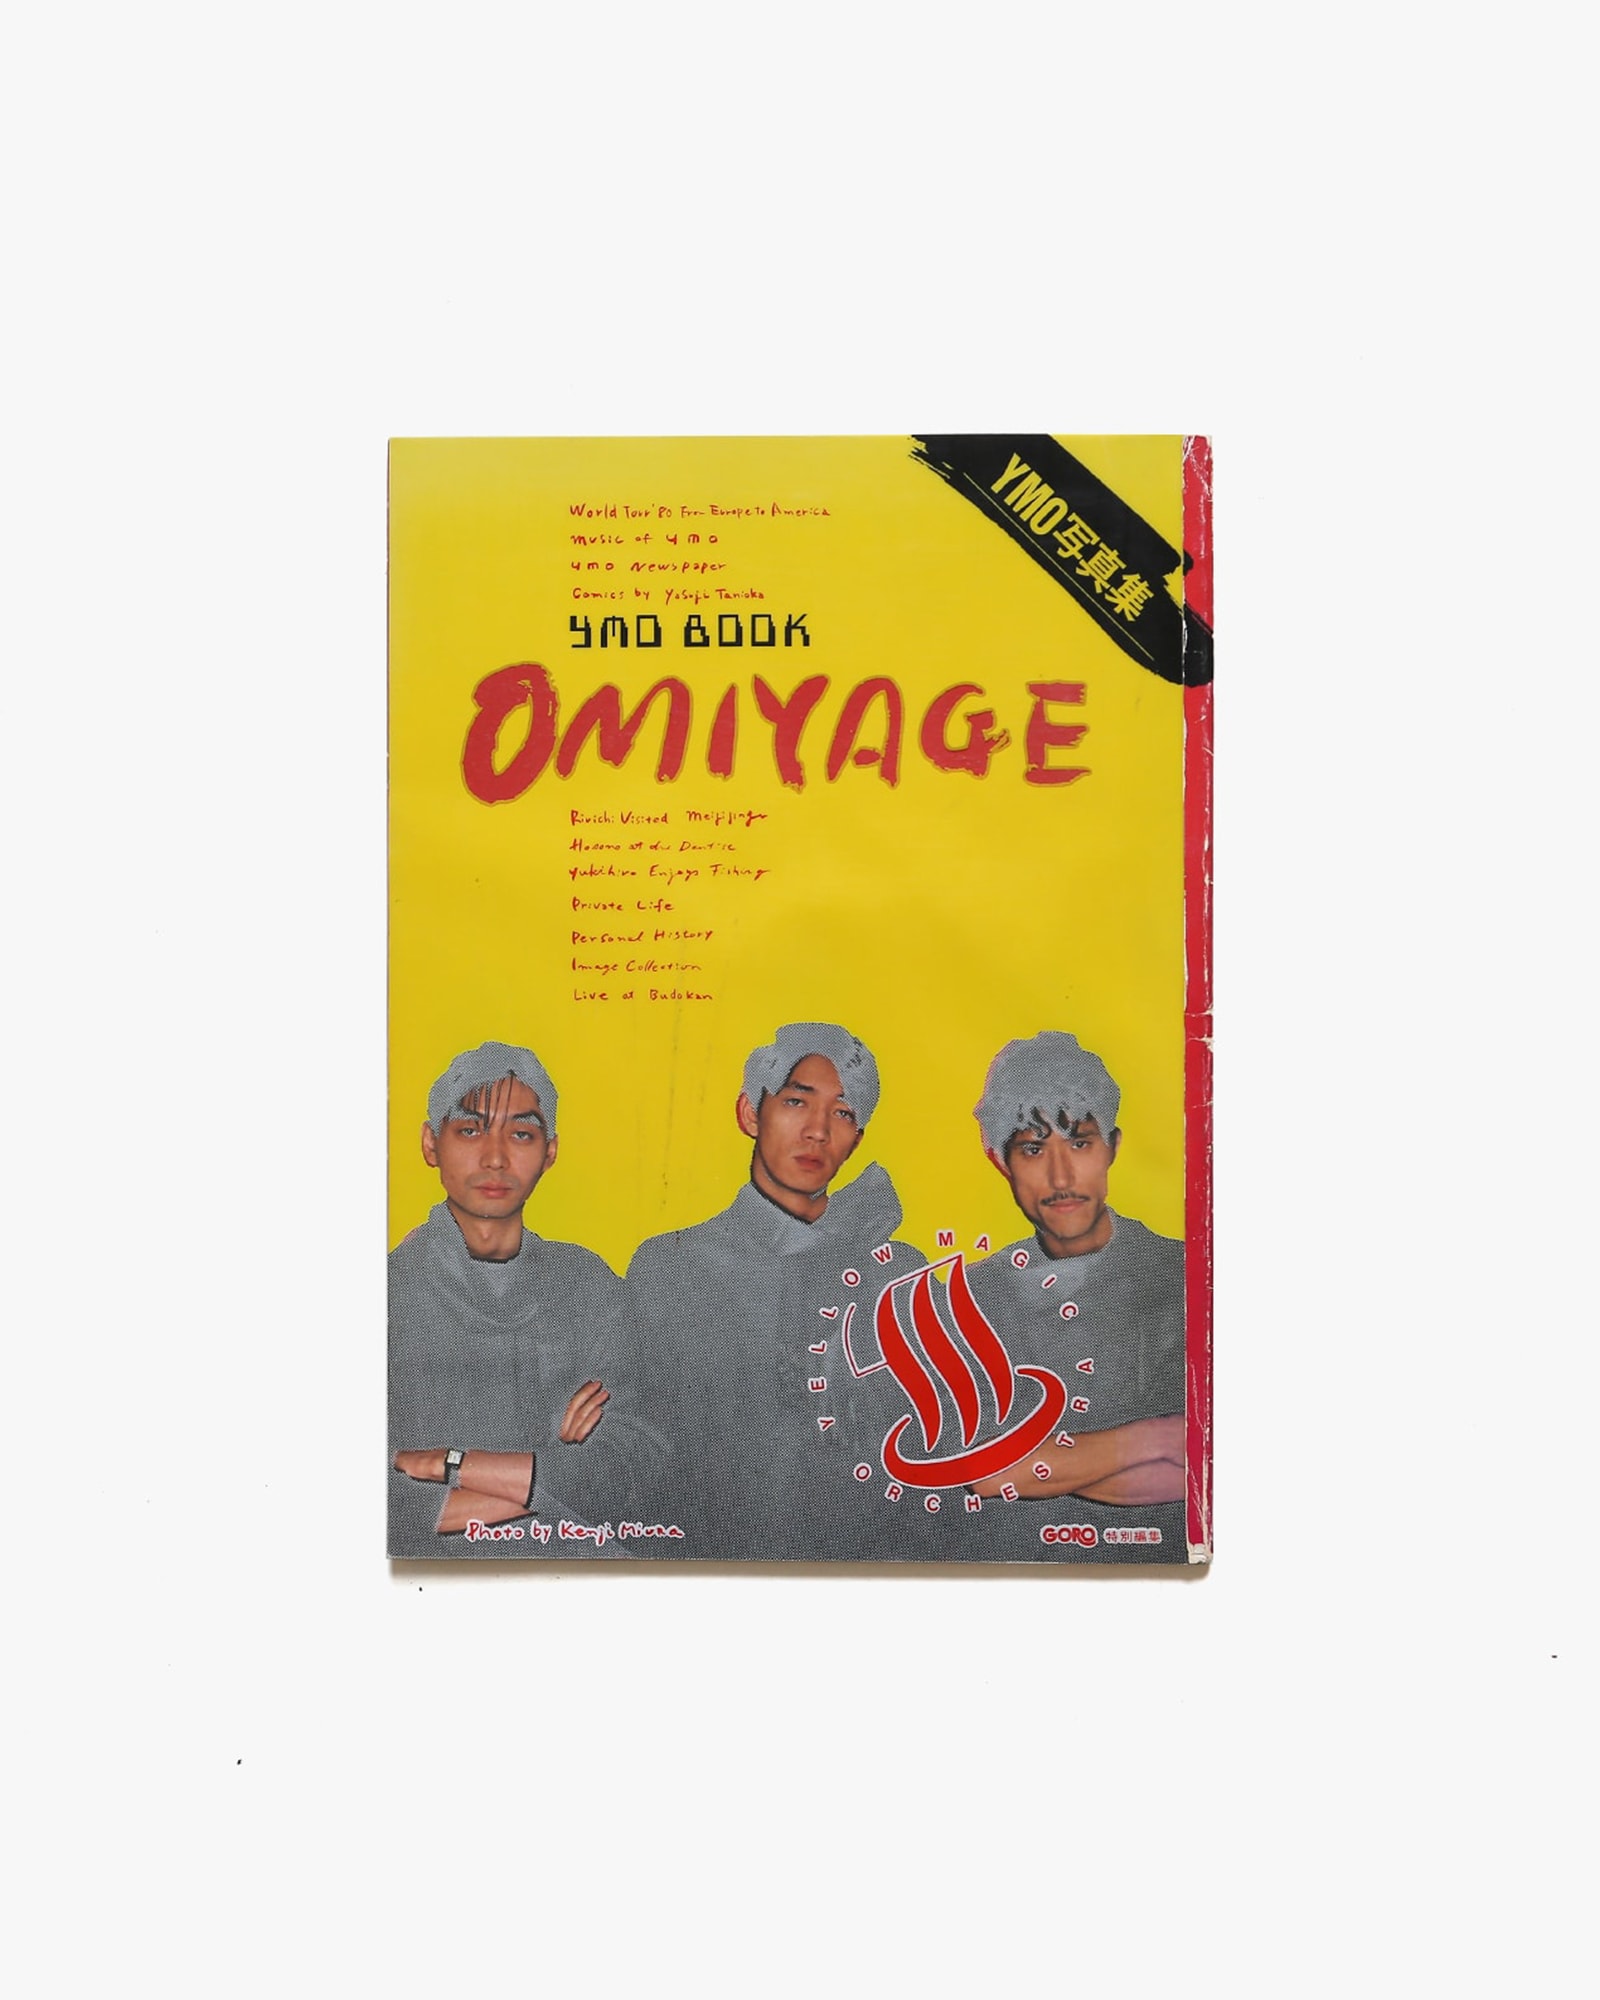 YMO Book: Omiyage